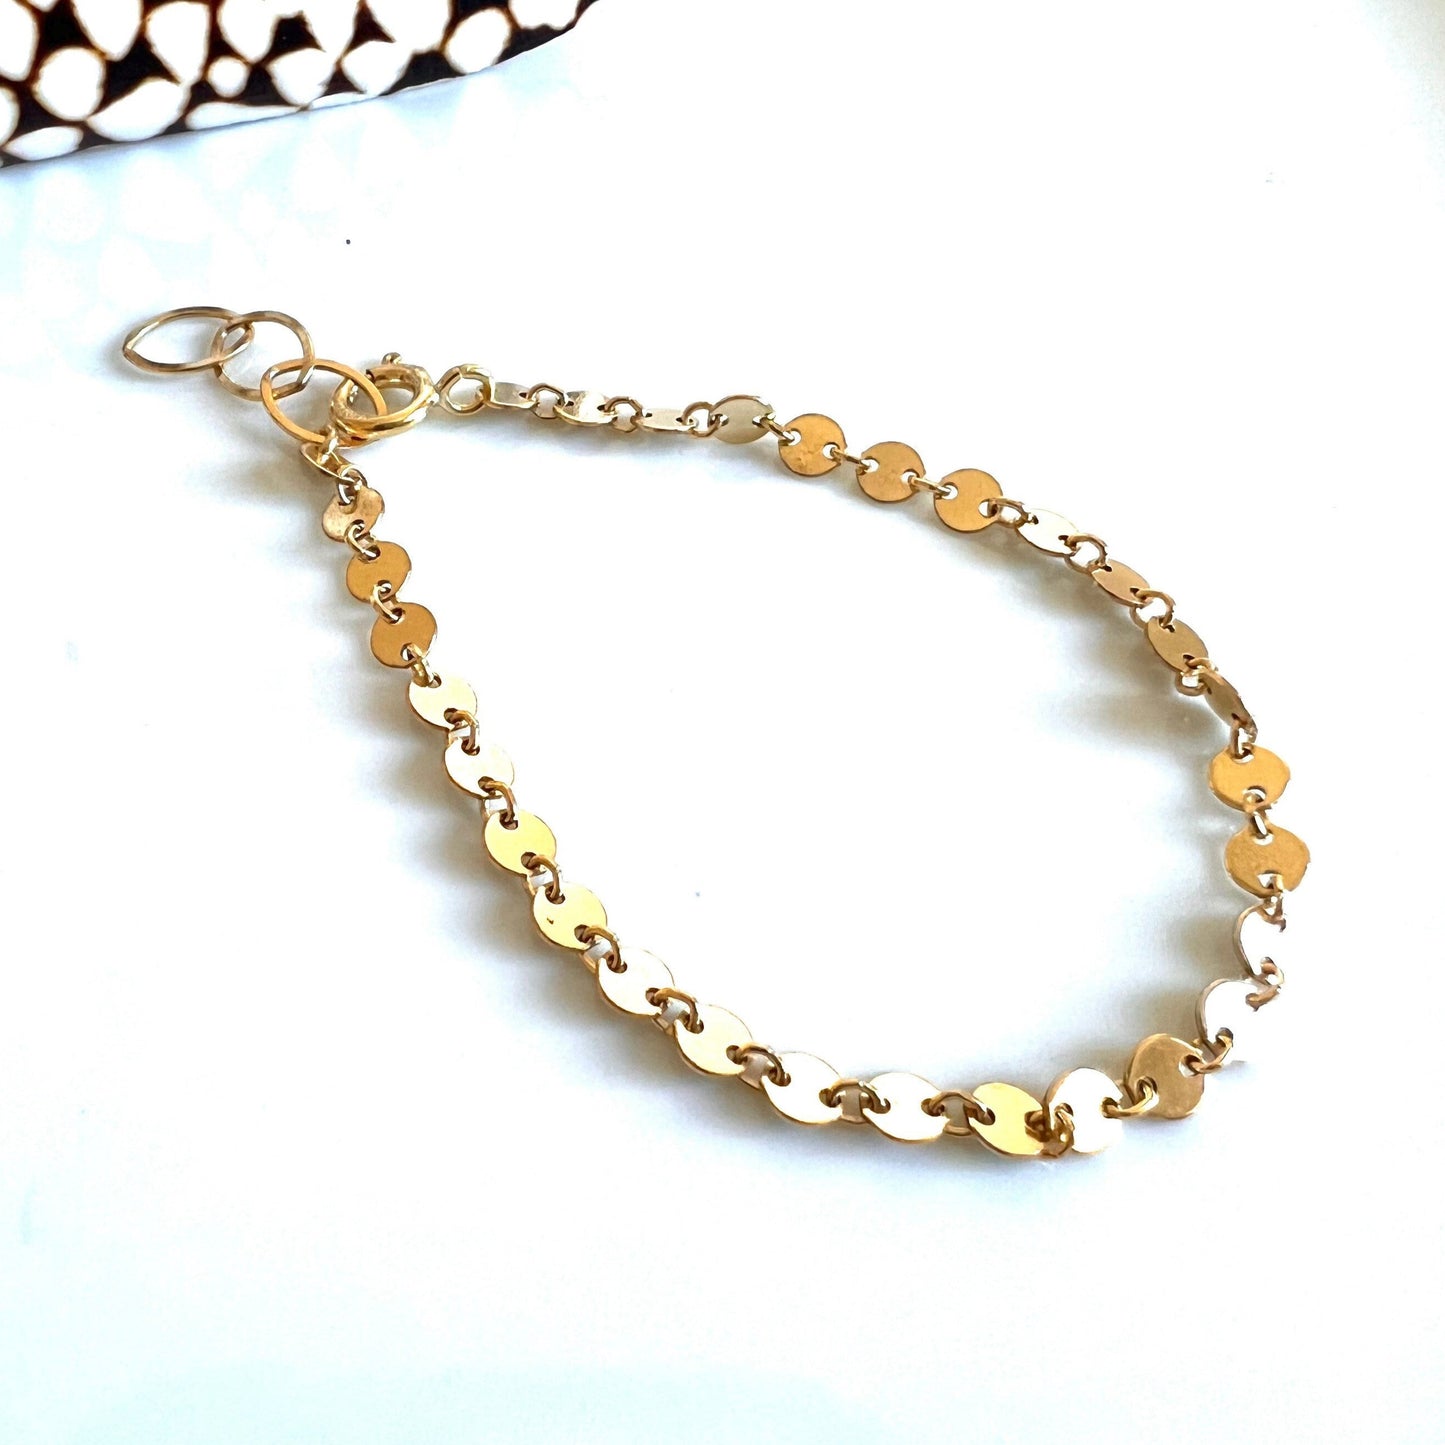 Dainty gold coin chain bracelet